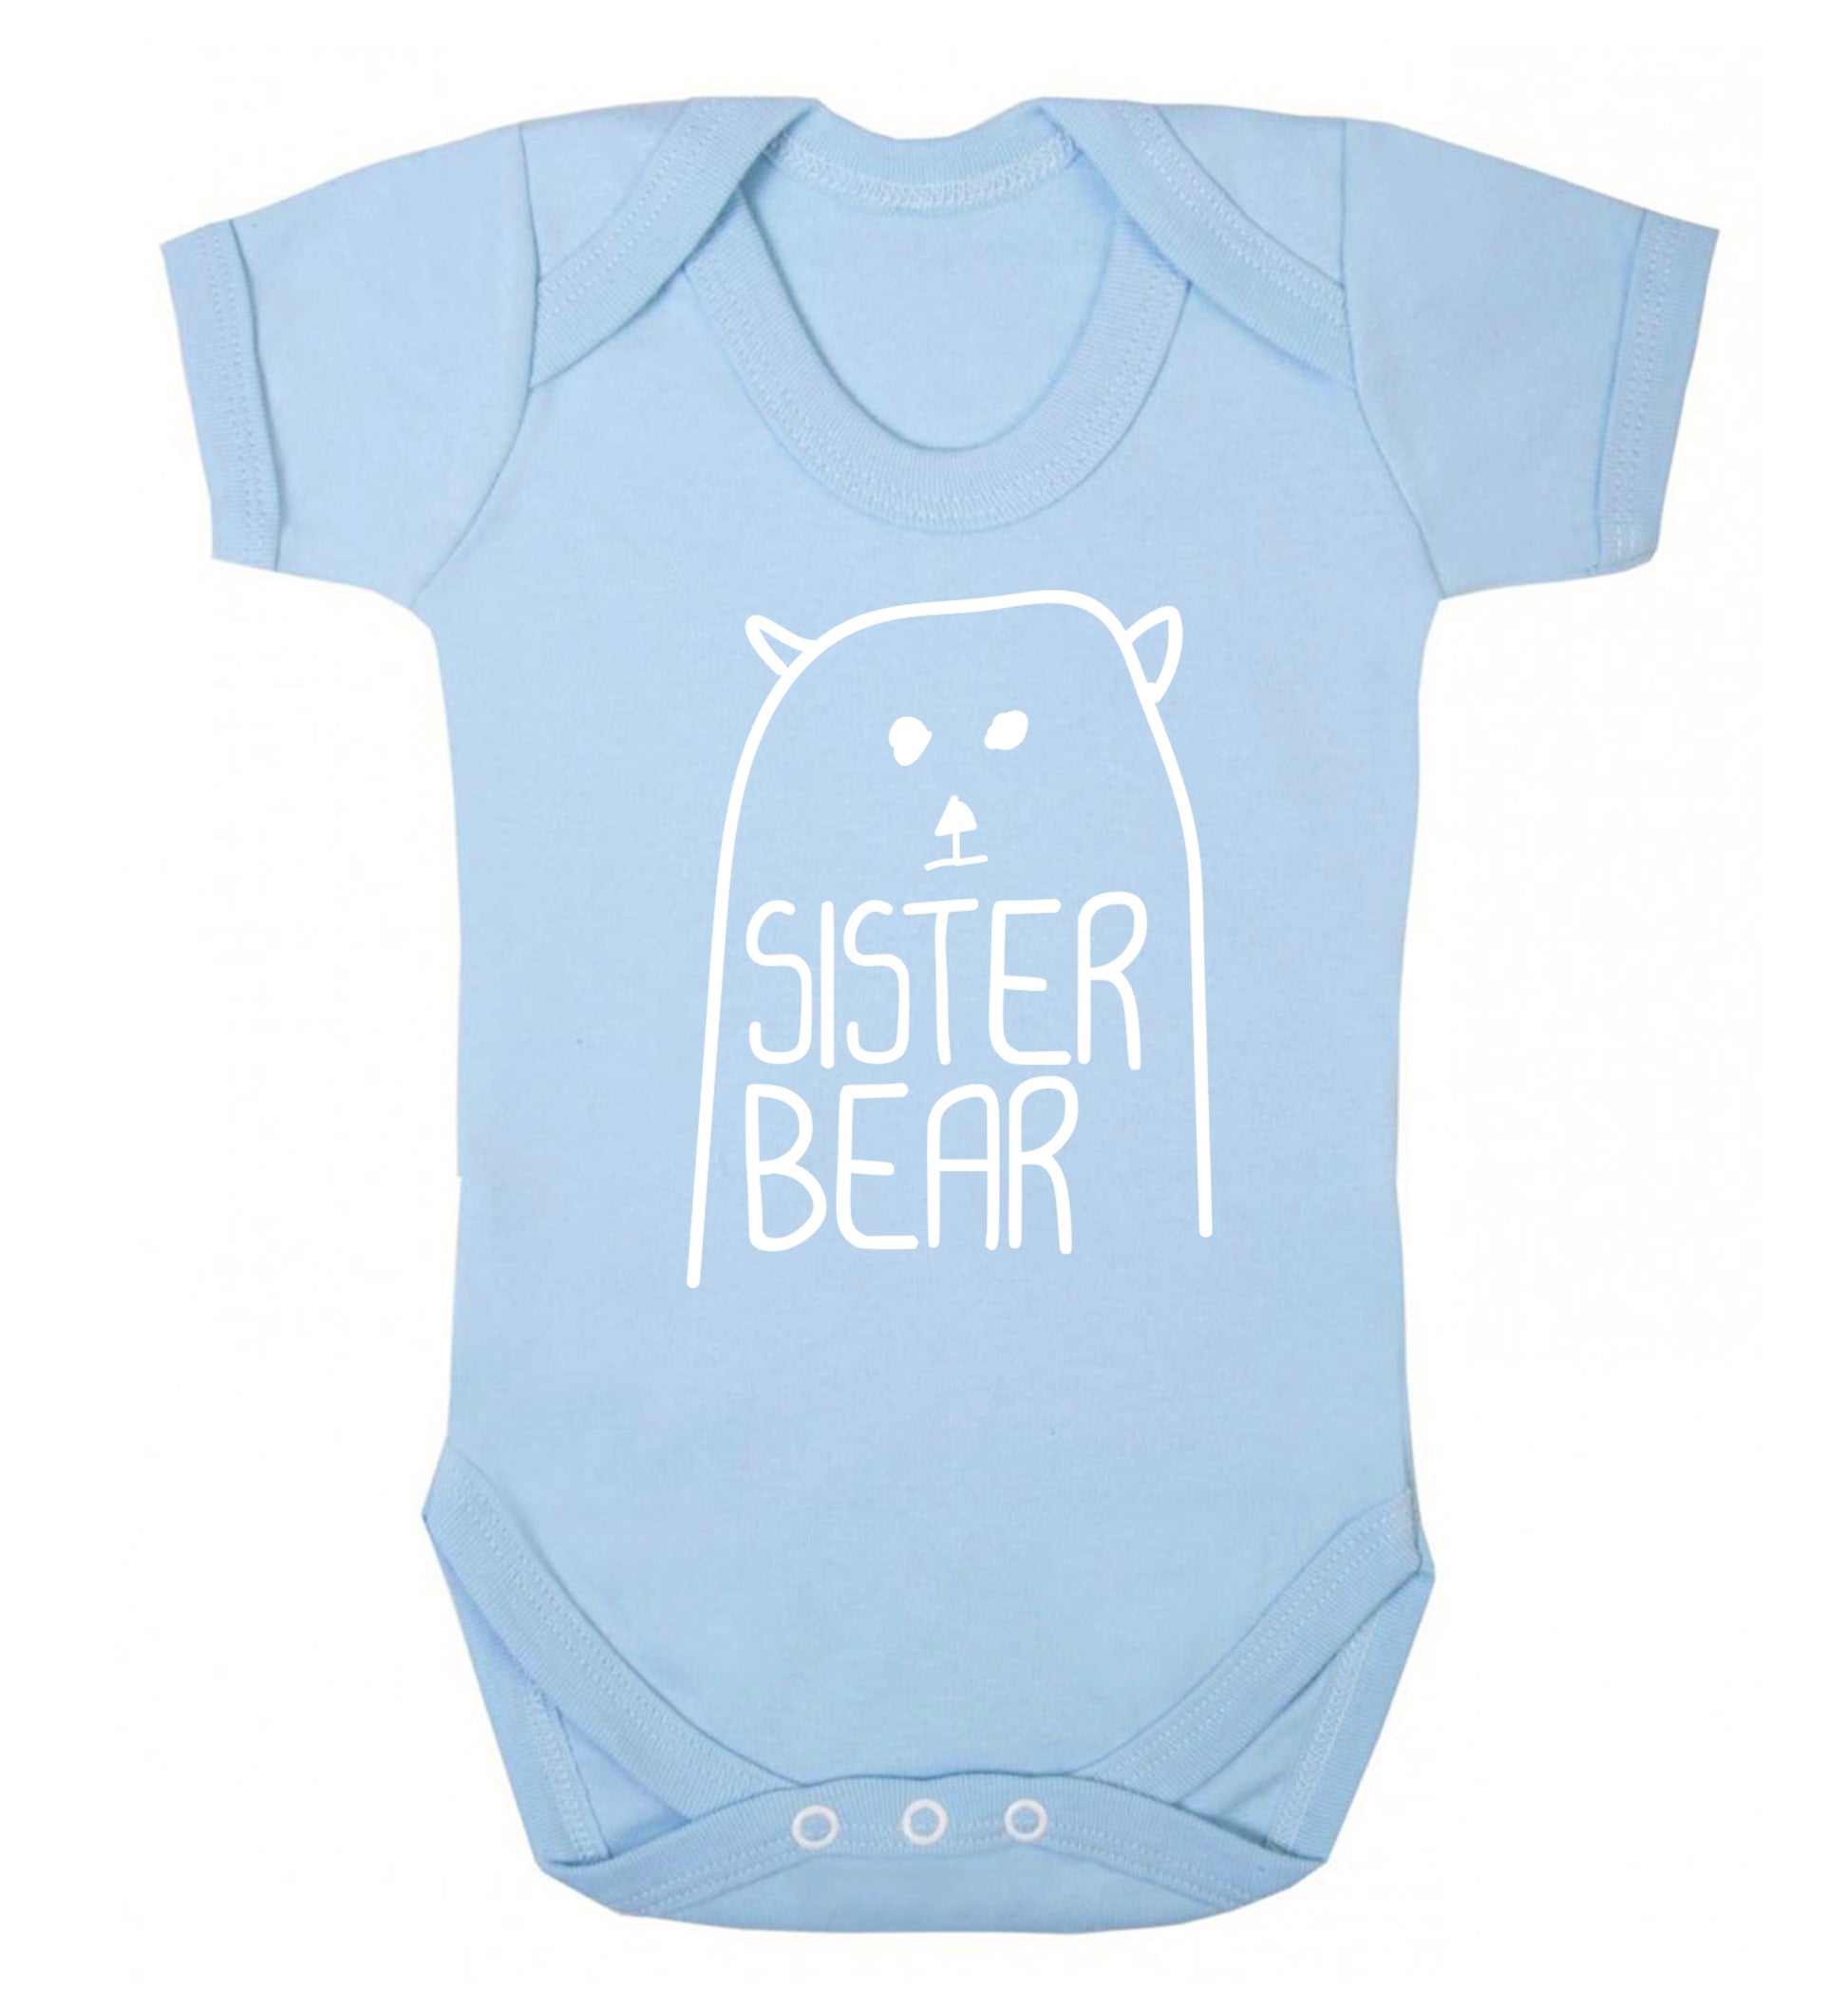 Sister bear Baby Vest pale blue 18-24 months